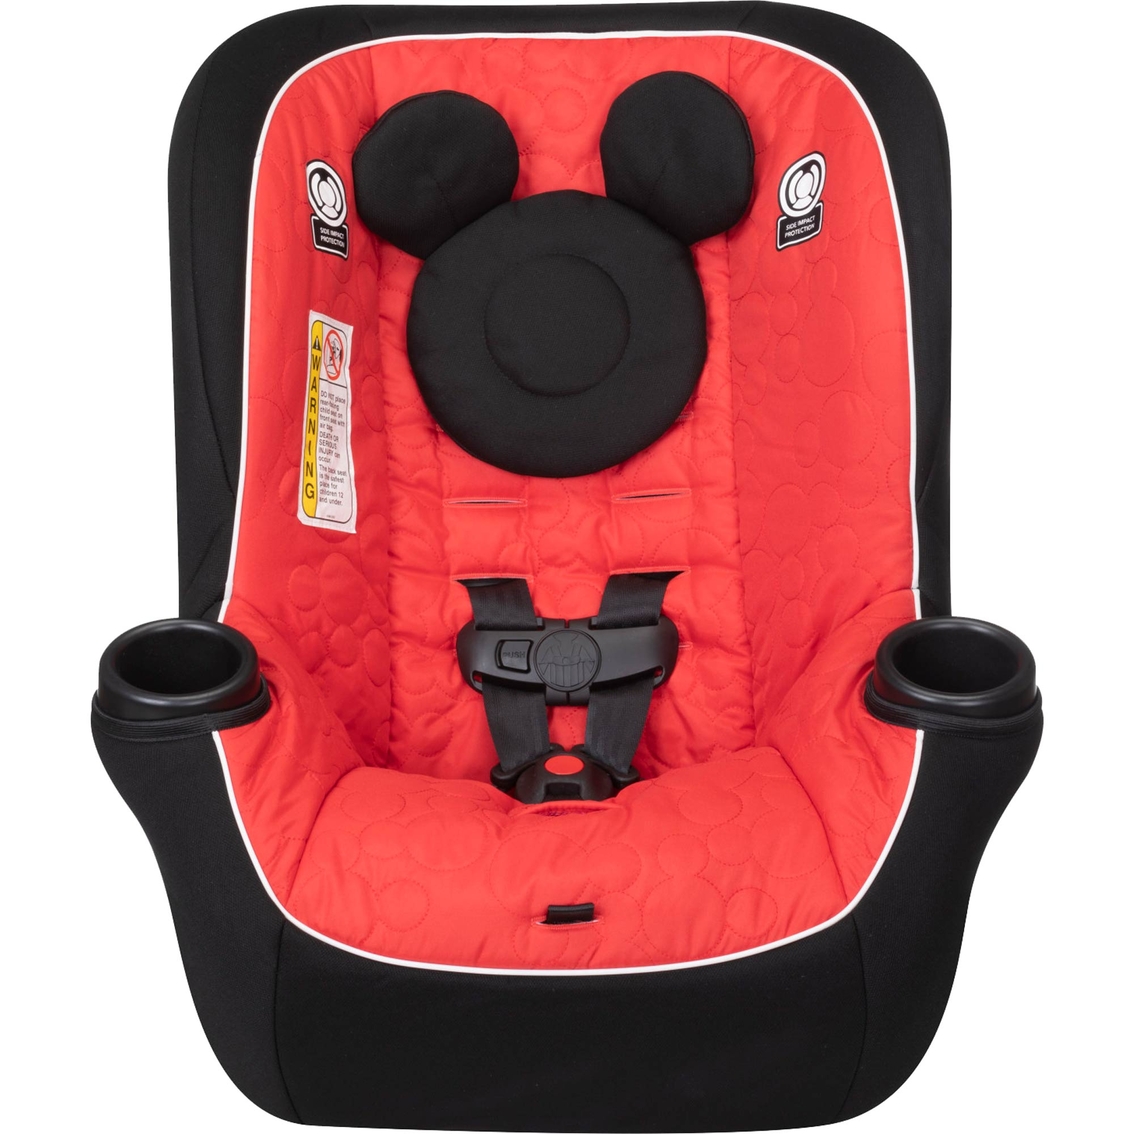 Disney Baby Onlook 2-in-1 Convertible Car Seat - Image 1 of 6